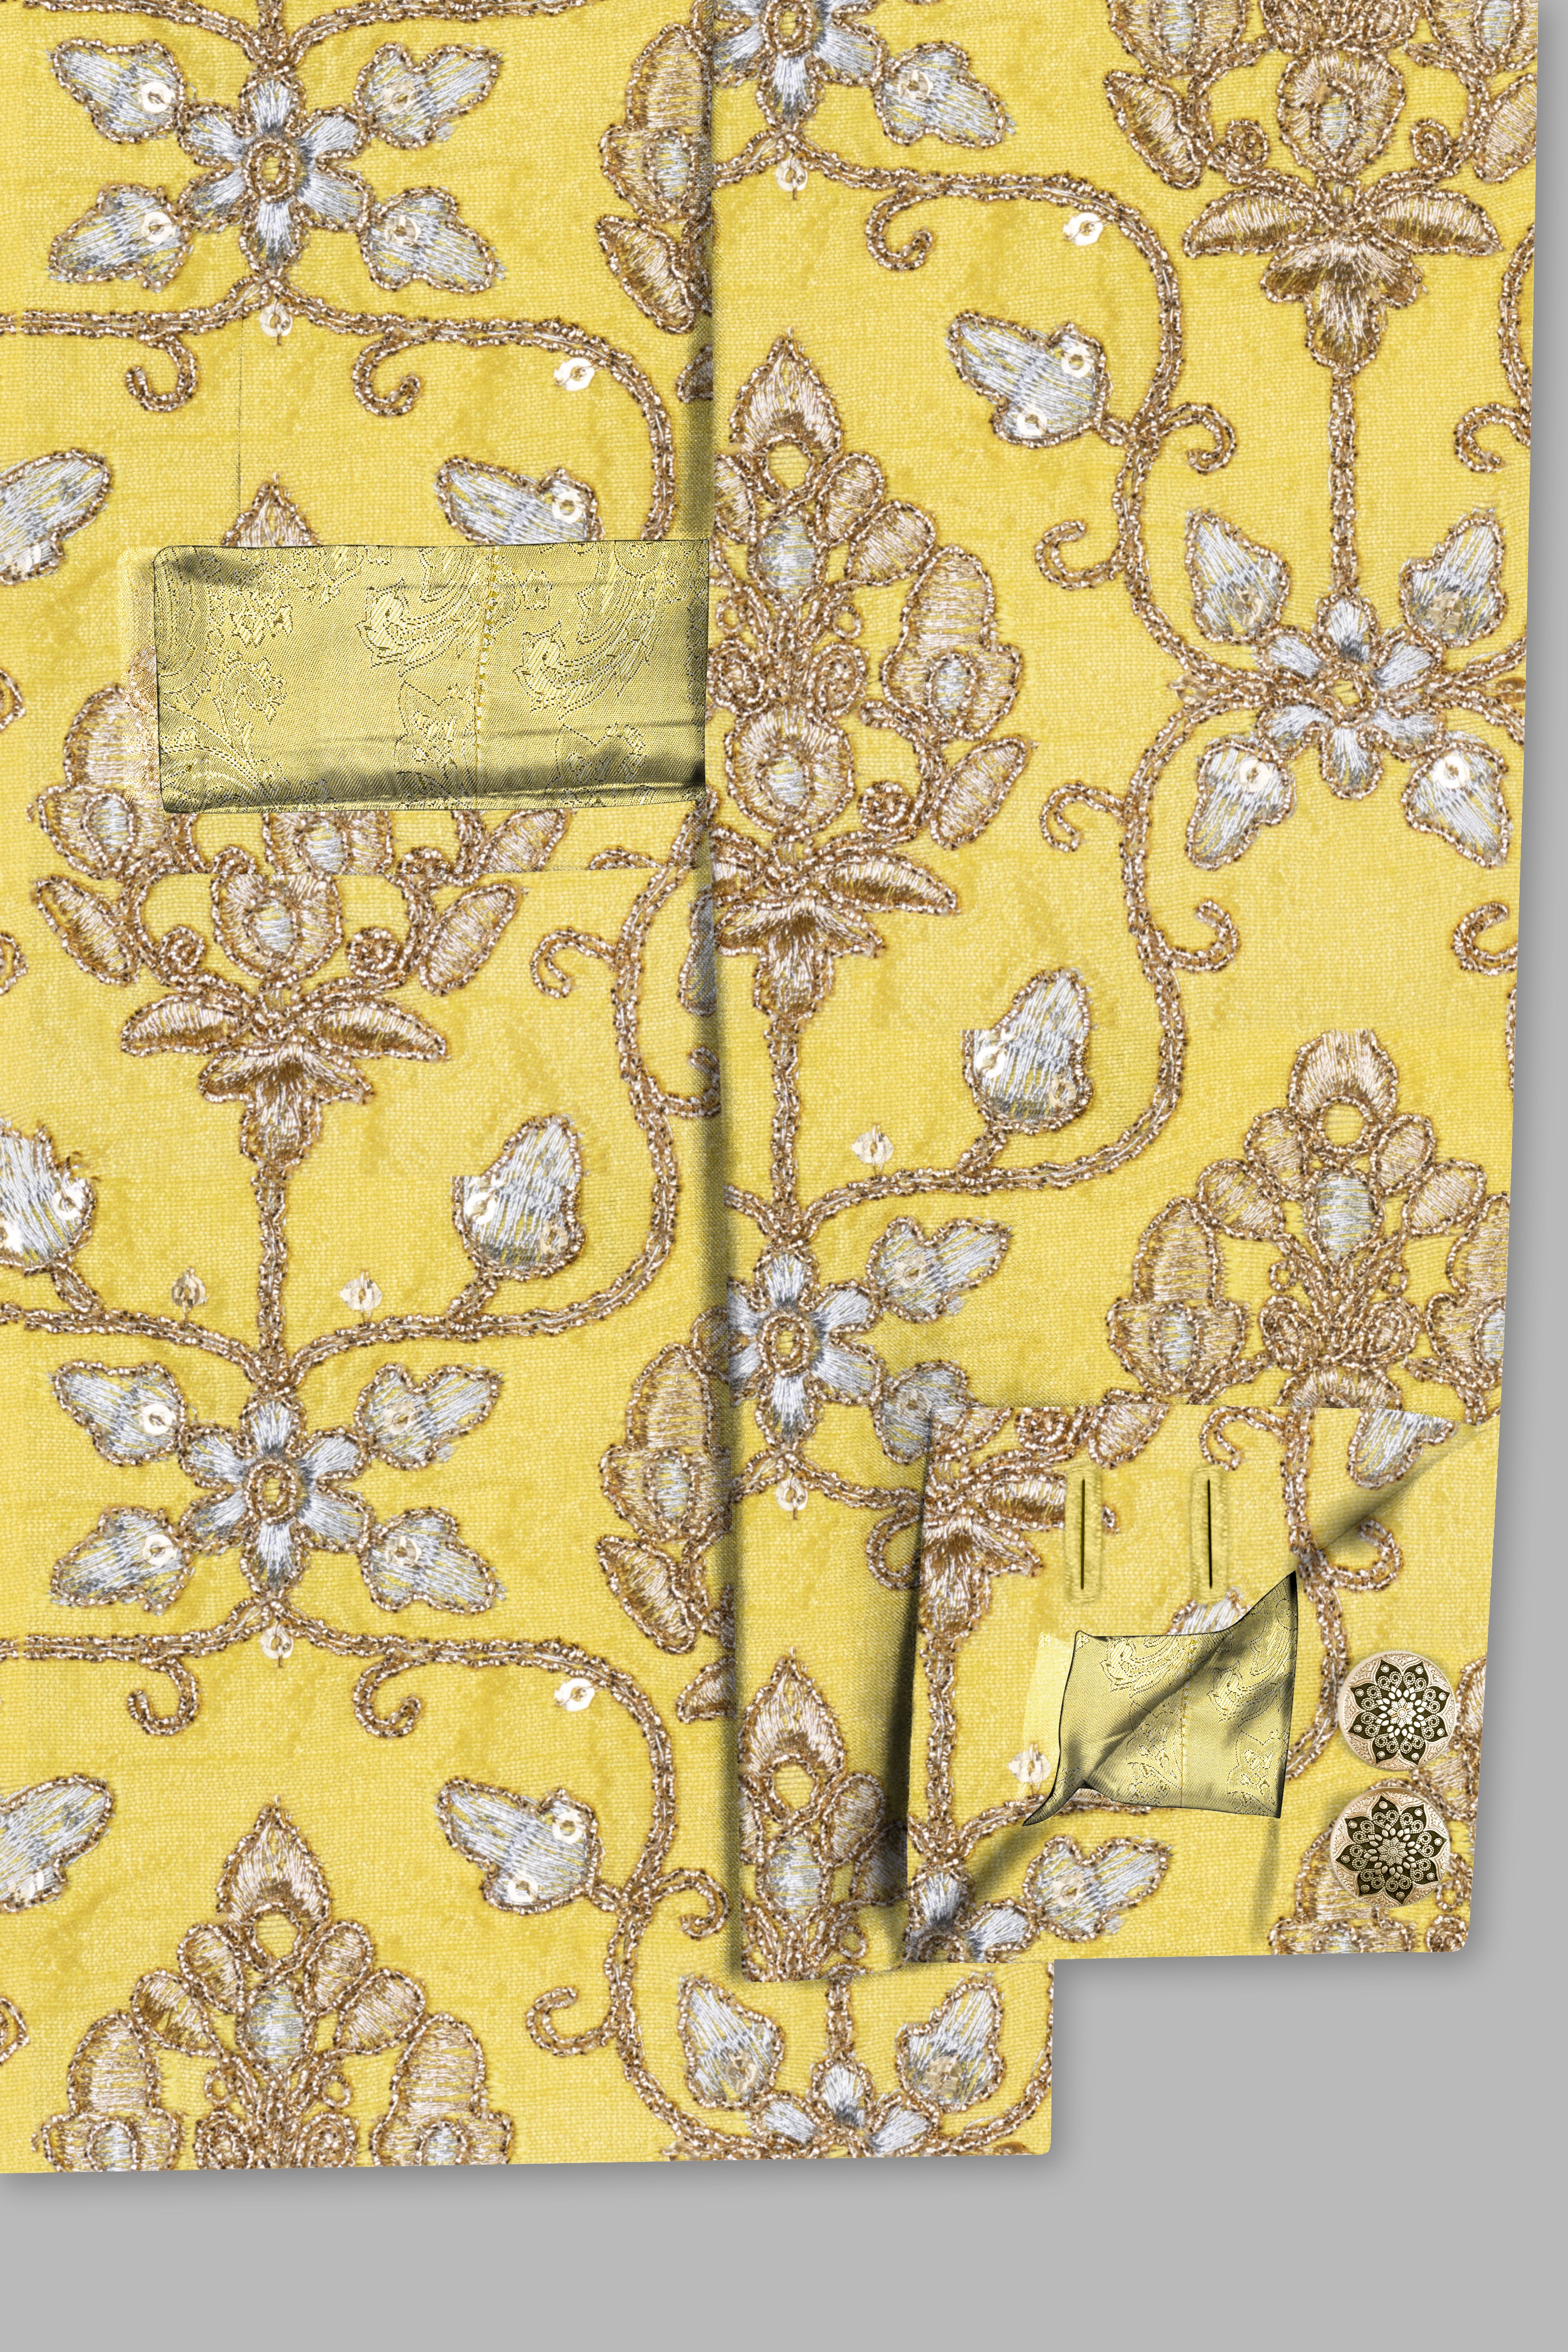 Marigold Yellow And Quicksand Brown Thread Embroidered Cross Placket Bandhgala Jodhpuri